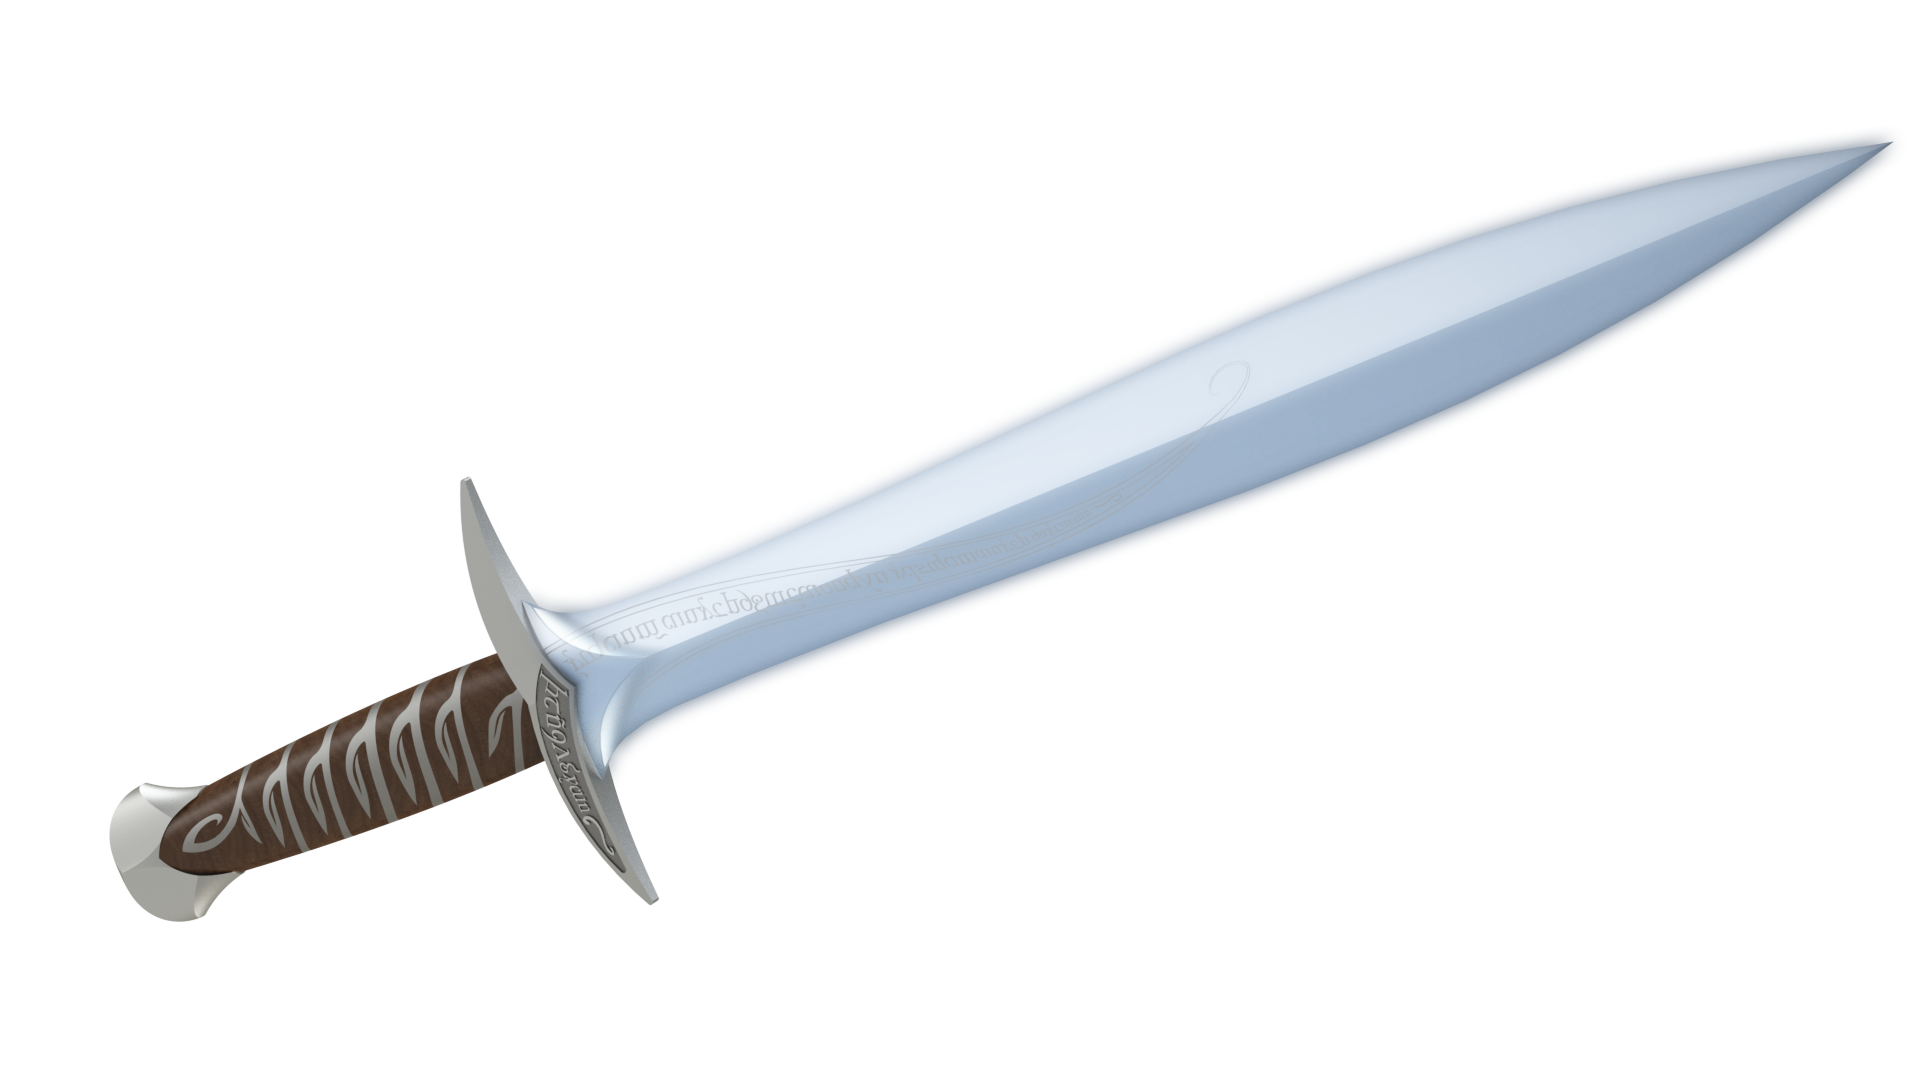 Sting bilbo sword宝剑模型